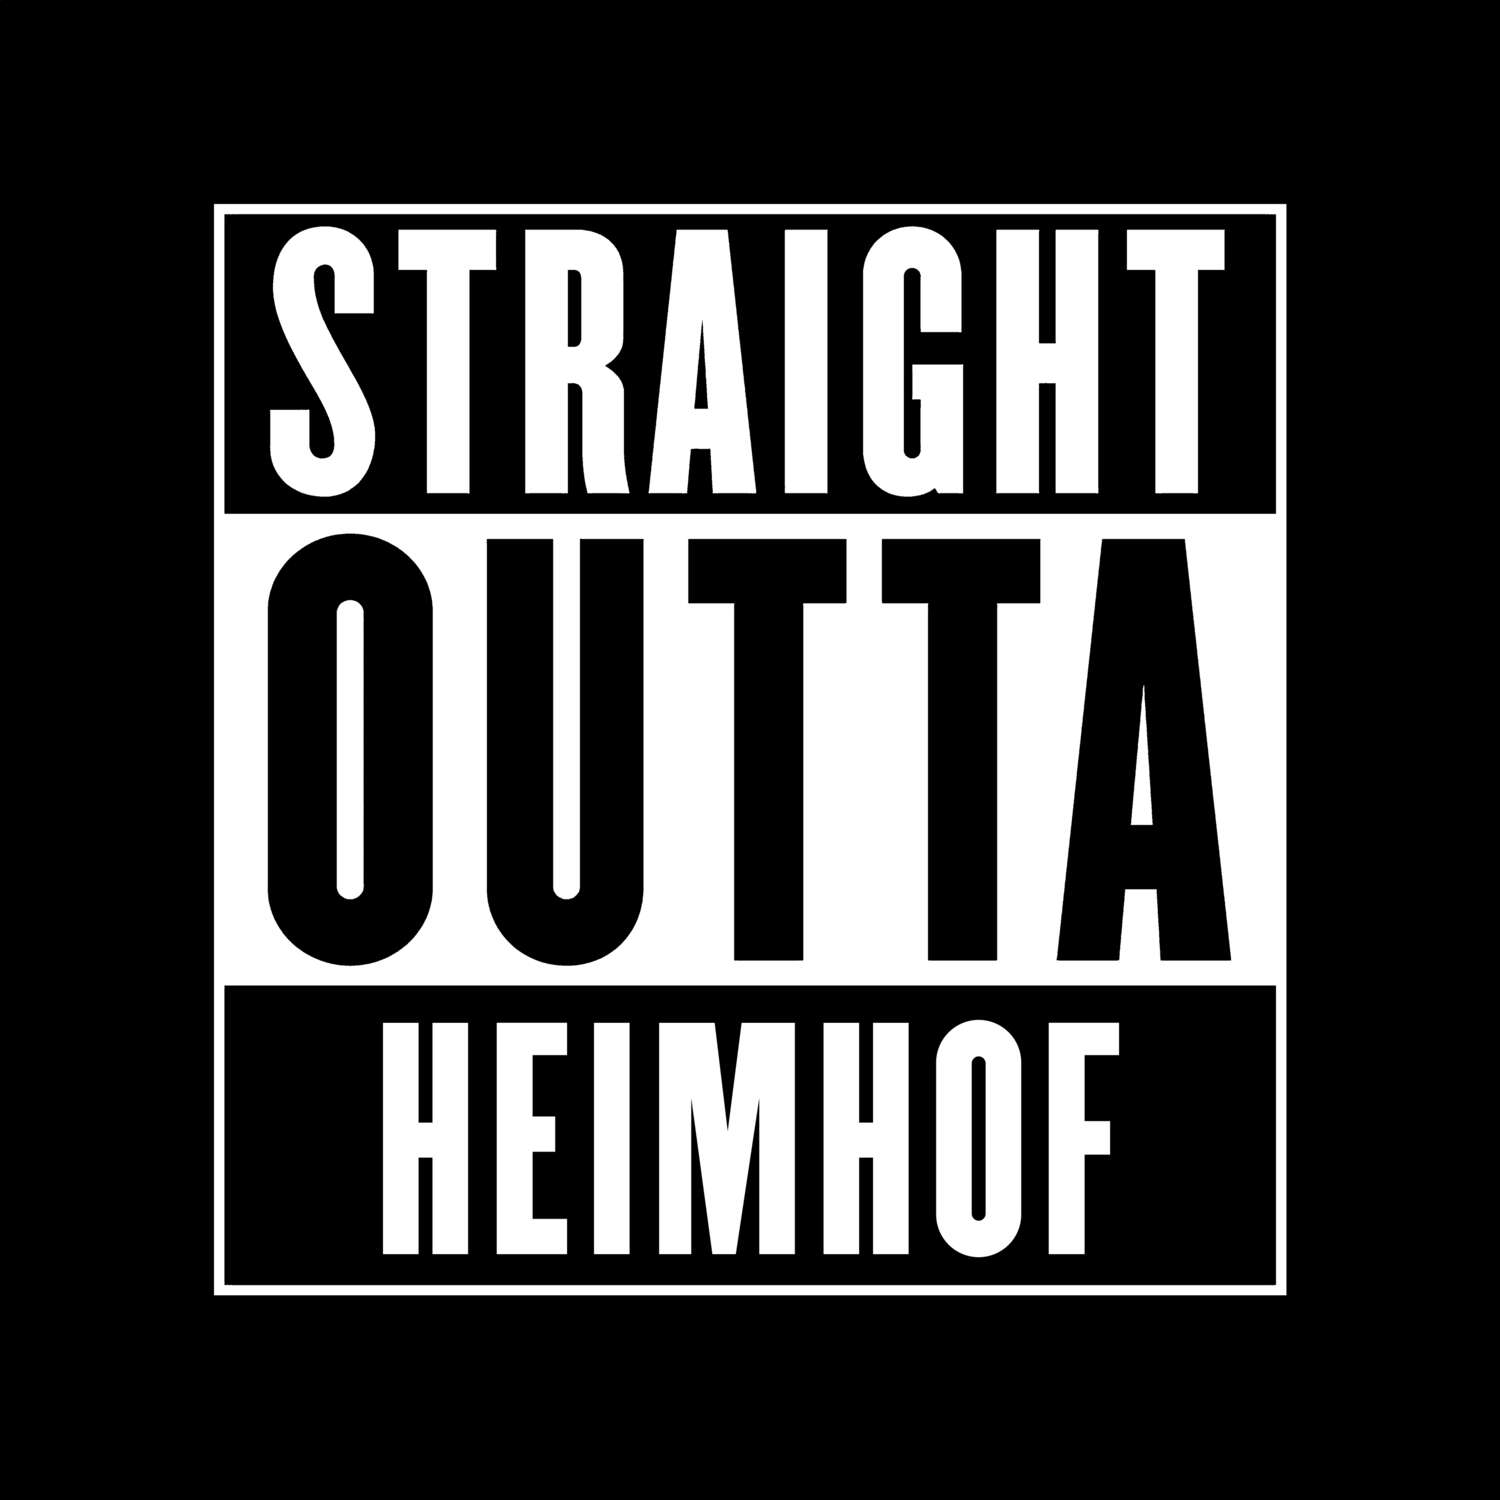 Heimhof T-Shirt »Straight Outta«